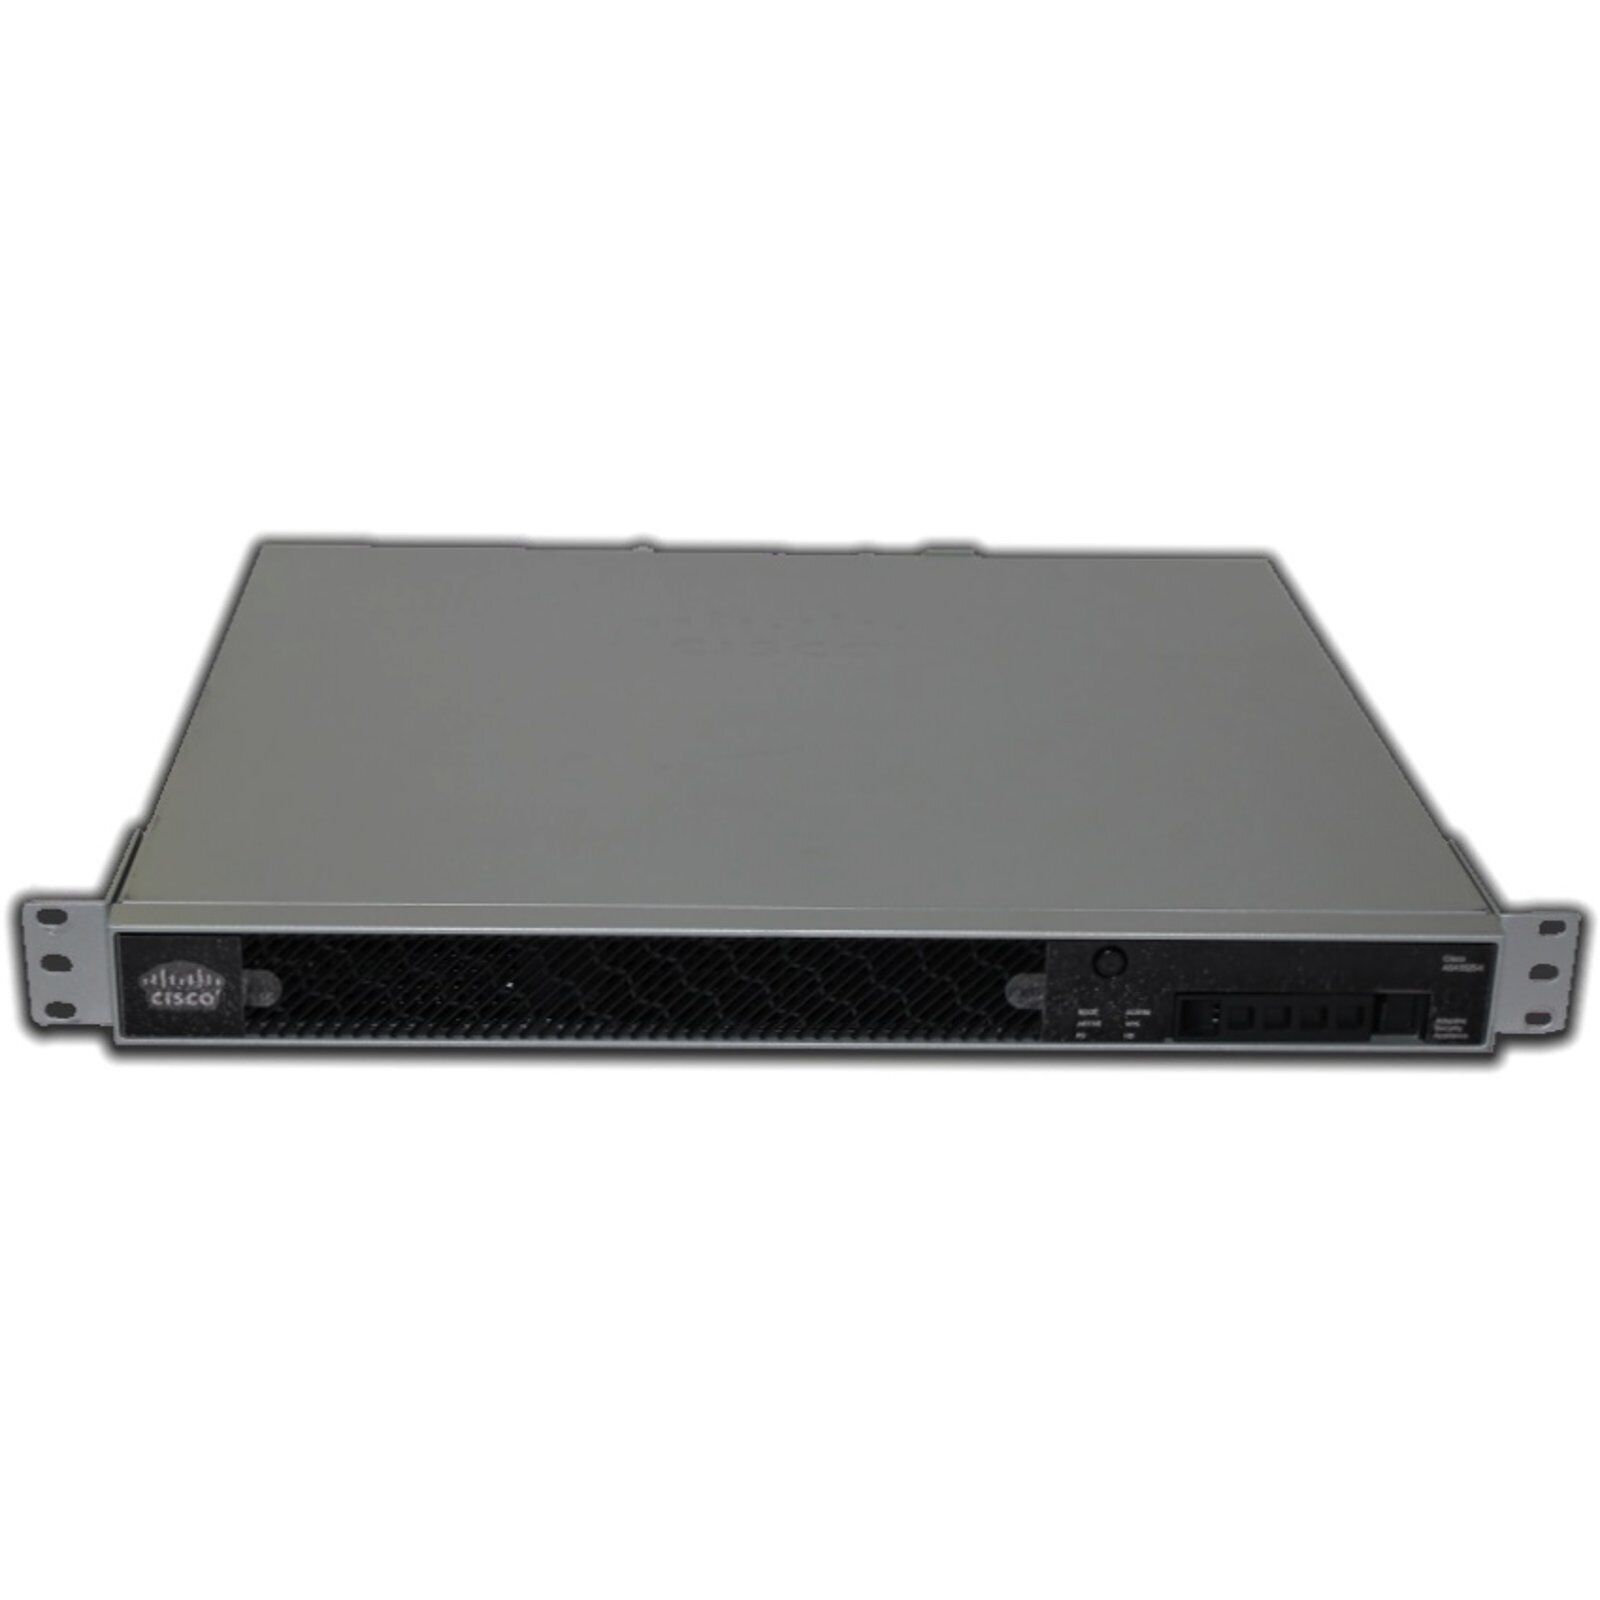 Cisco ASA 5525-K9 8P 1GbE 3DES/AES SSD Firewall ASA5525-K9